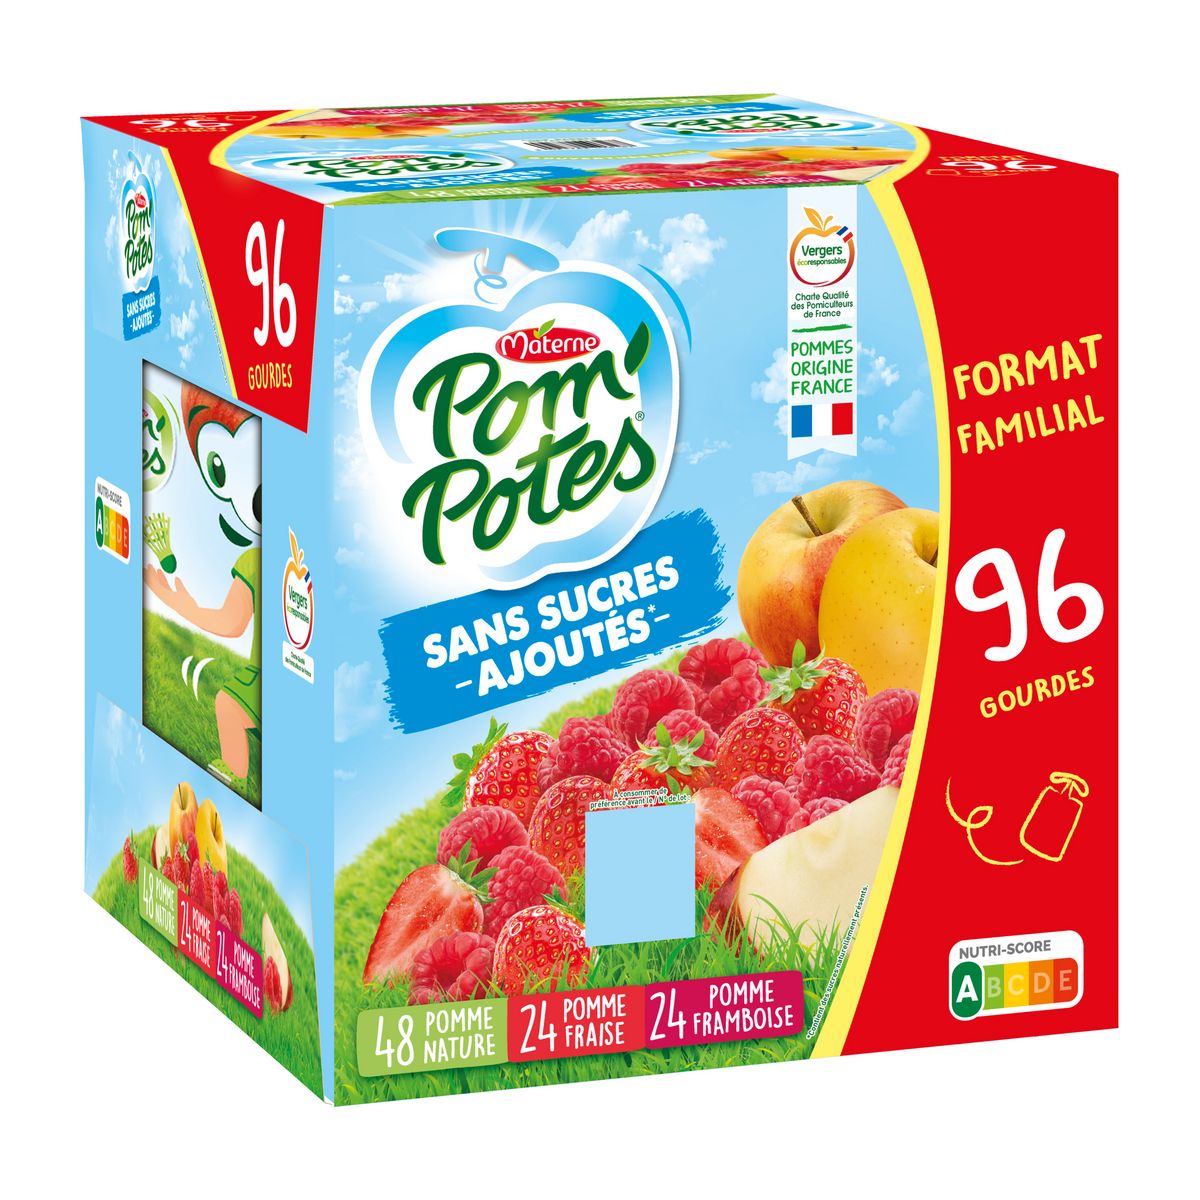 POM'POTES Gourdes pomme nature fraise framboise 96 gourdes 96x90g pas cher  